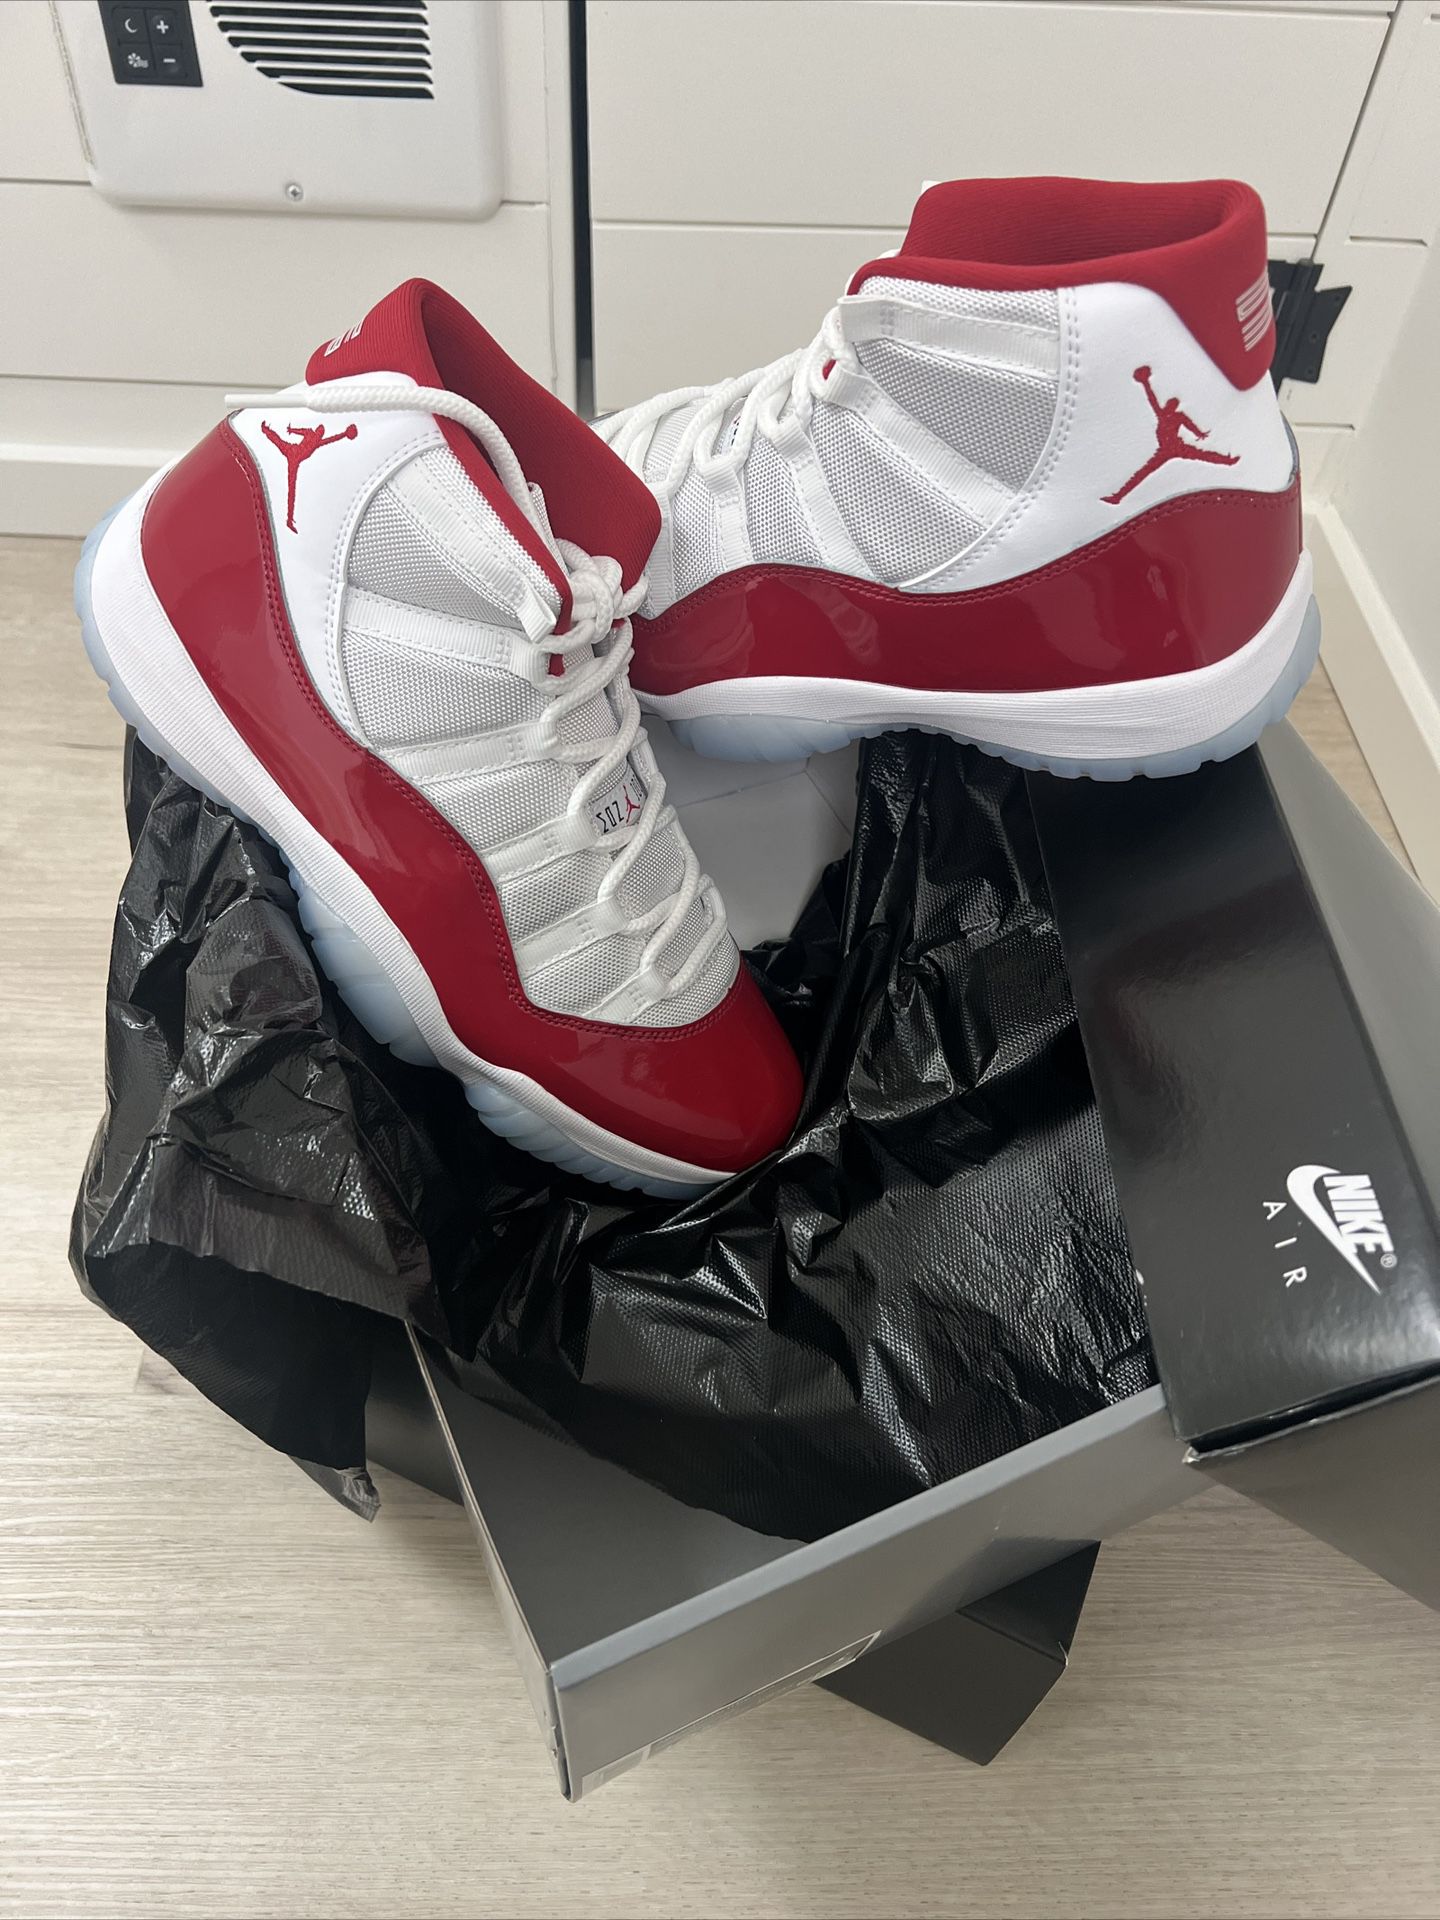 Jordan 11 Cherry Red NEW IN BOX 